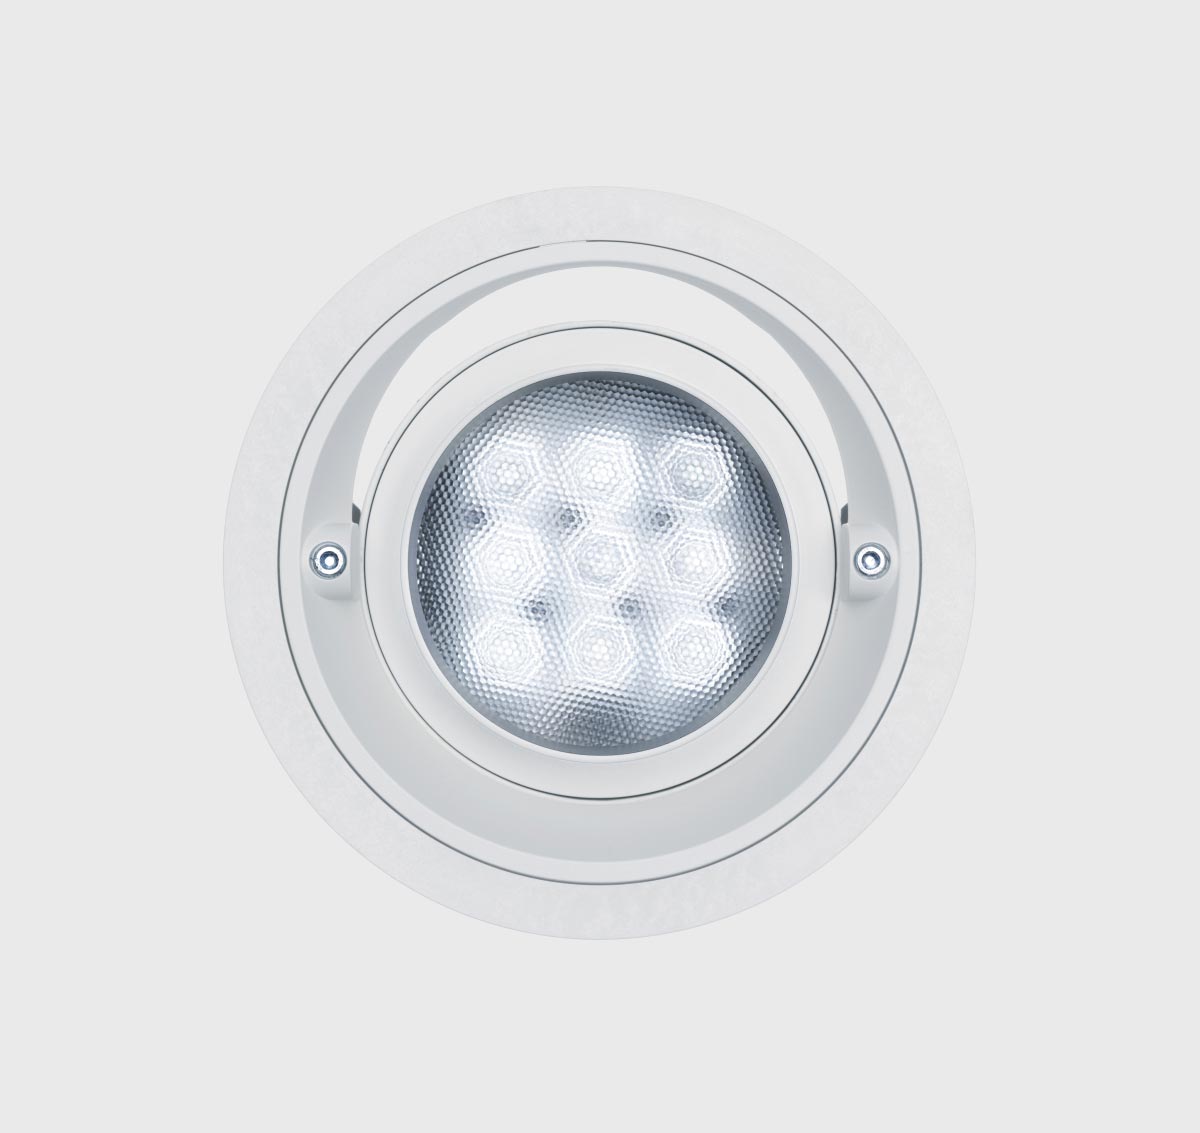 Quintessence Round Recessed Luminaire LED 24W 3300 lm DALI neutral white 4000K